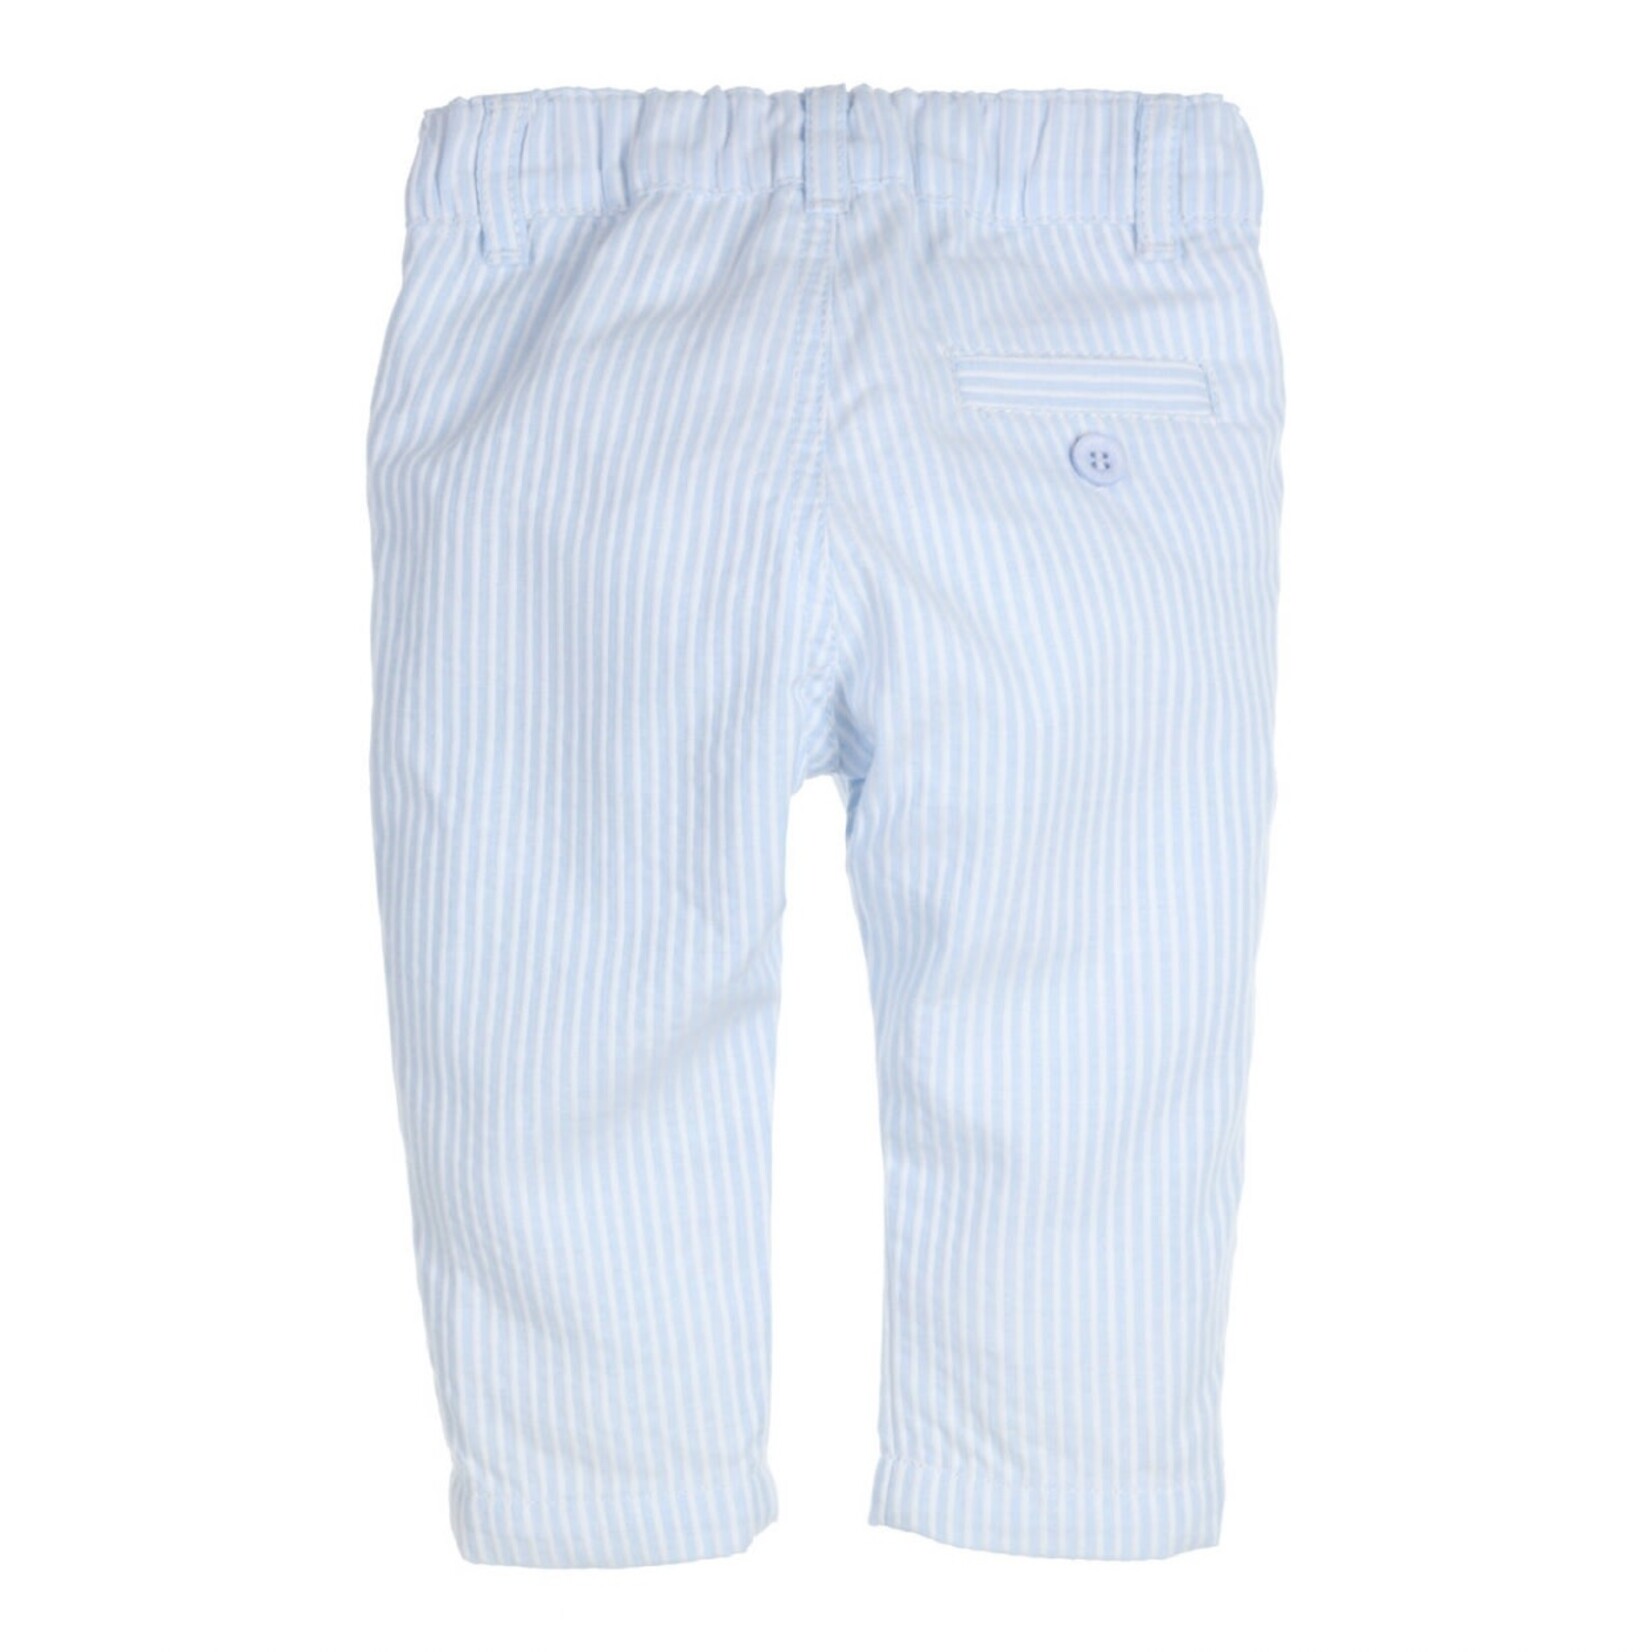 Gymp Trousers Raya_Light Blue - White_24